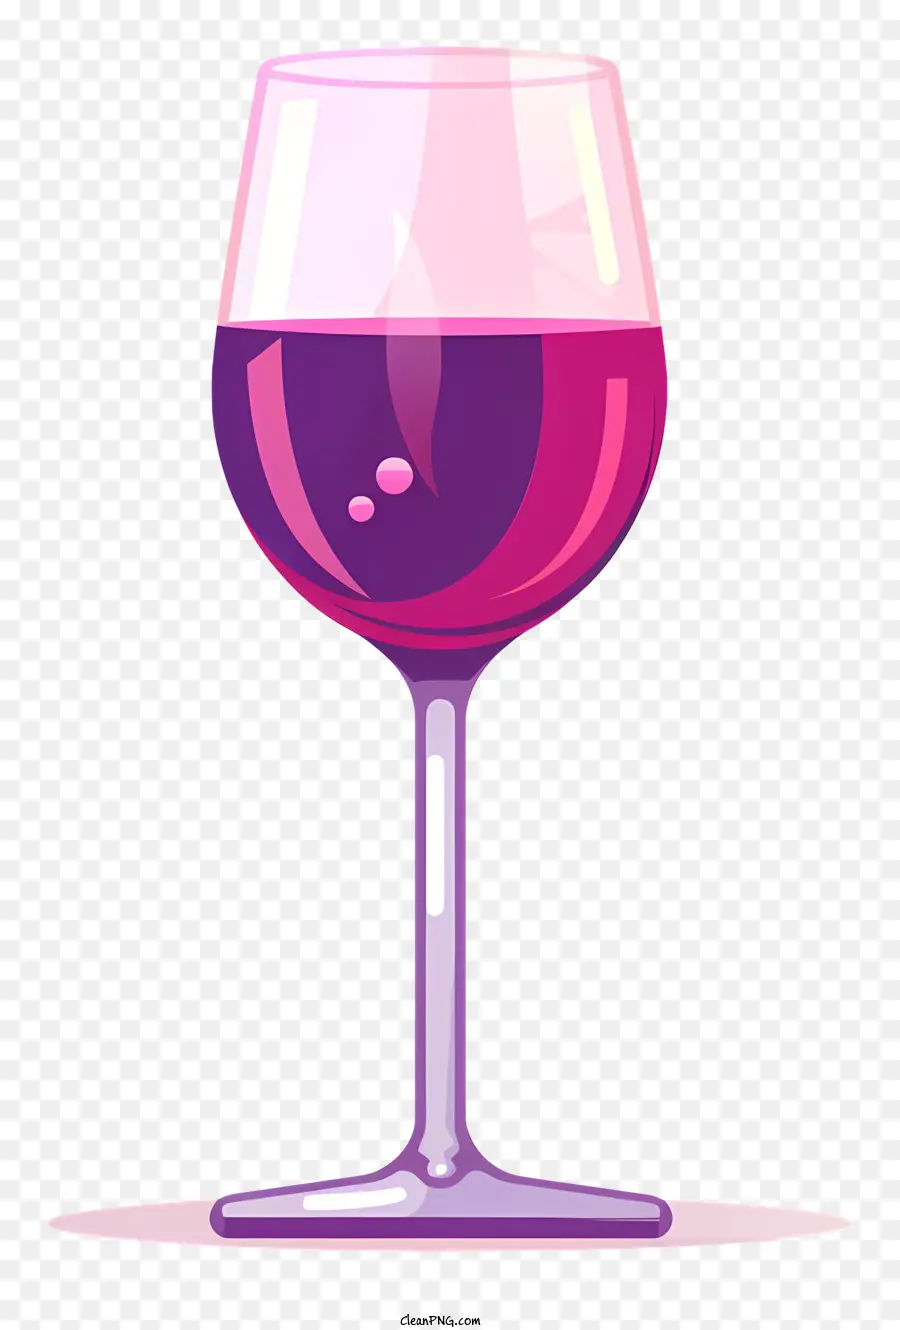 vetro di vino rosa vino in bicchiere bianco stelo bianco - Bicchiere di vino rosa con punto bianco